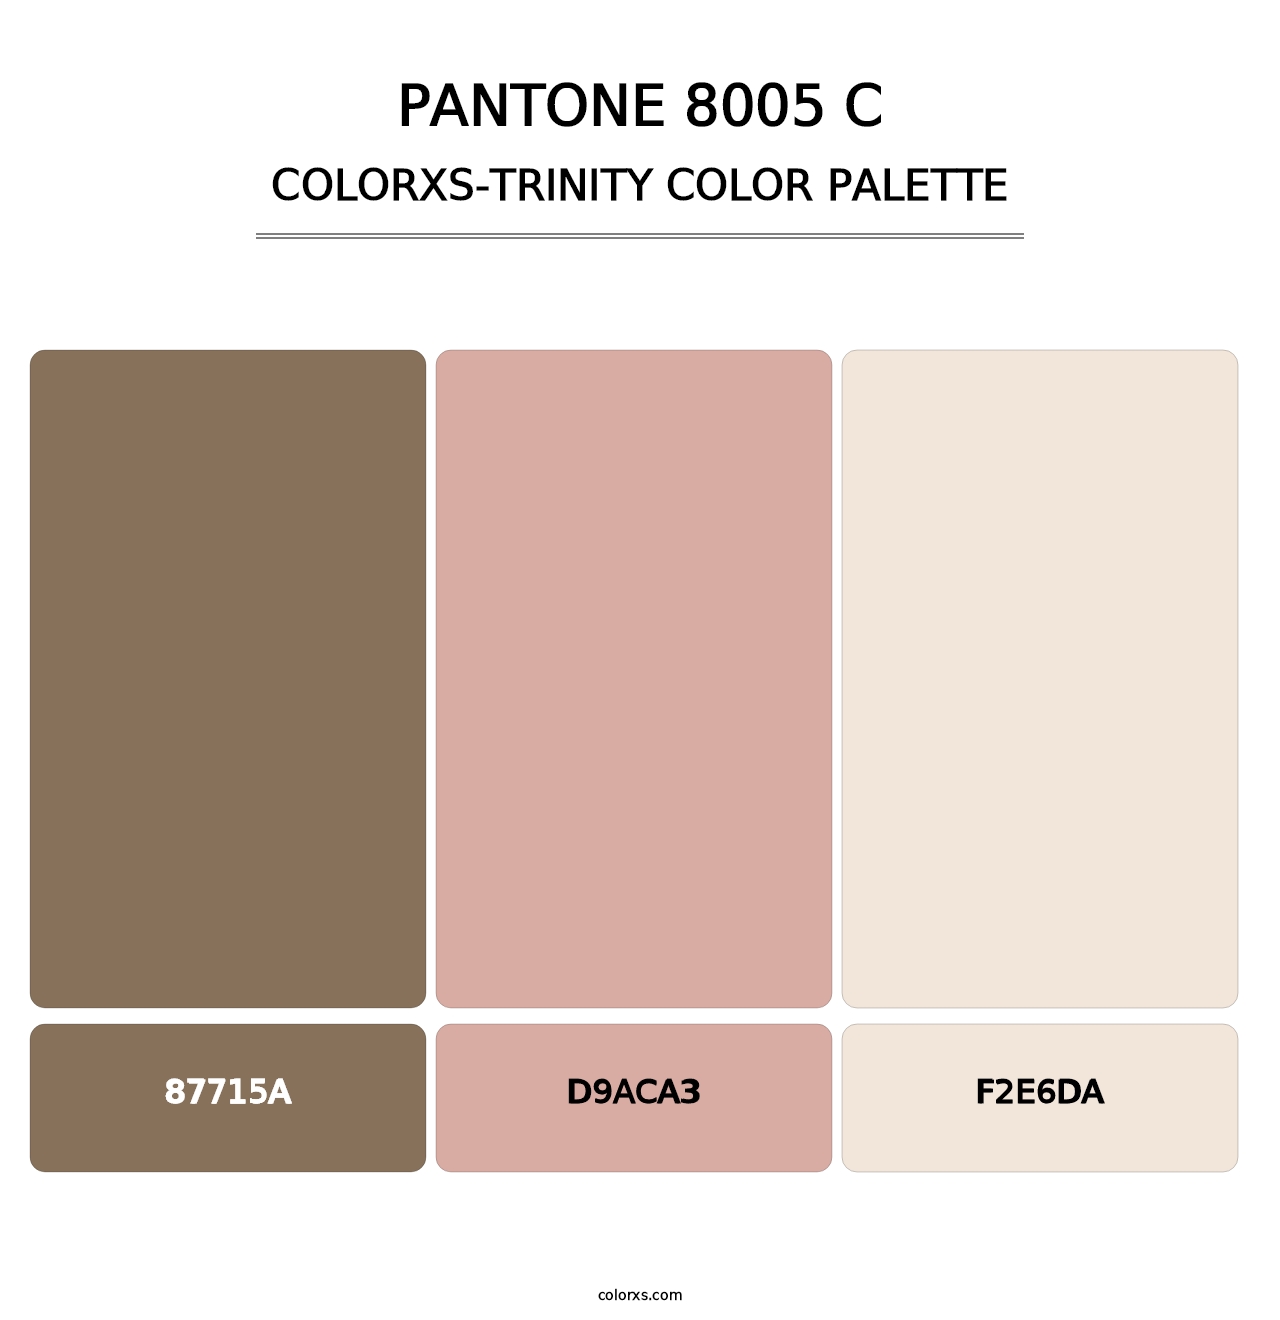 PANTONE 8005 C - Colorxs Trinity Palette